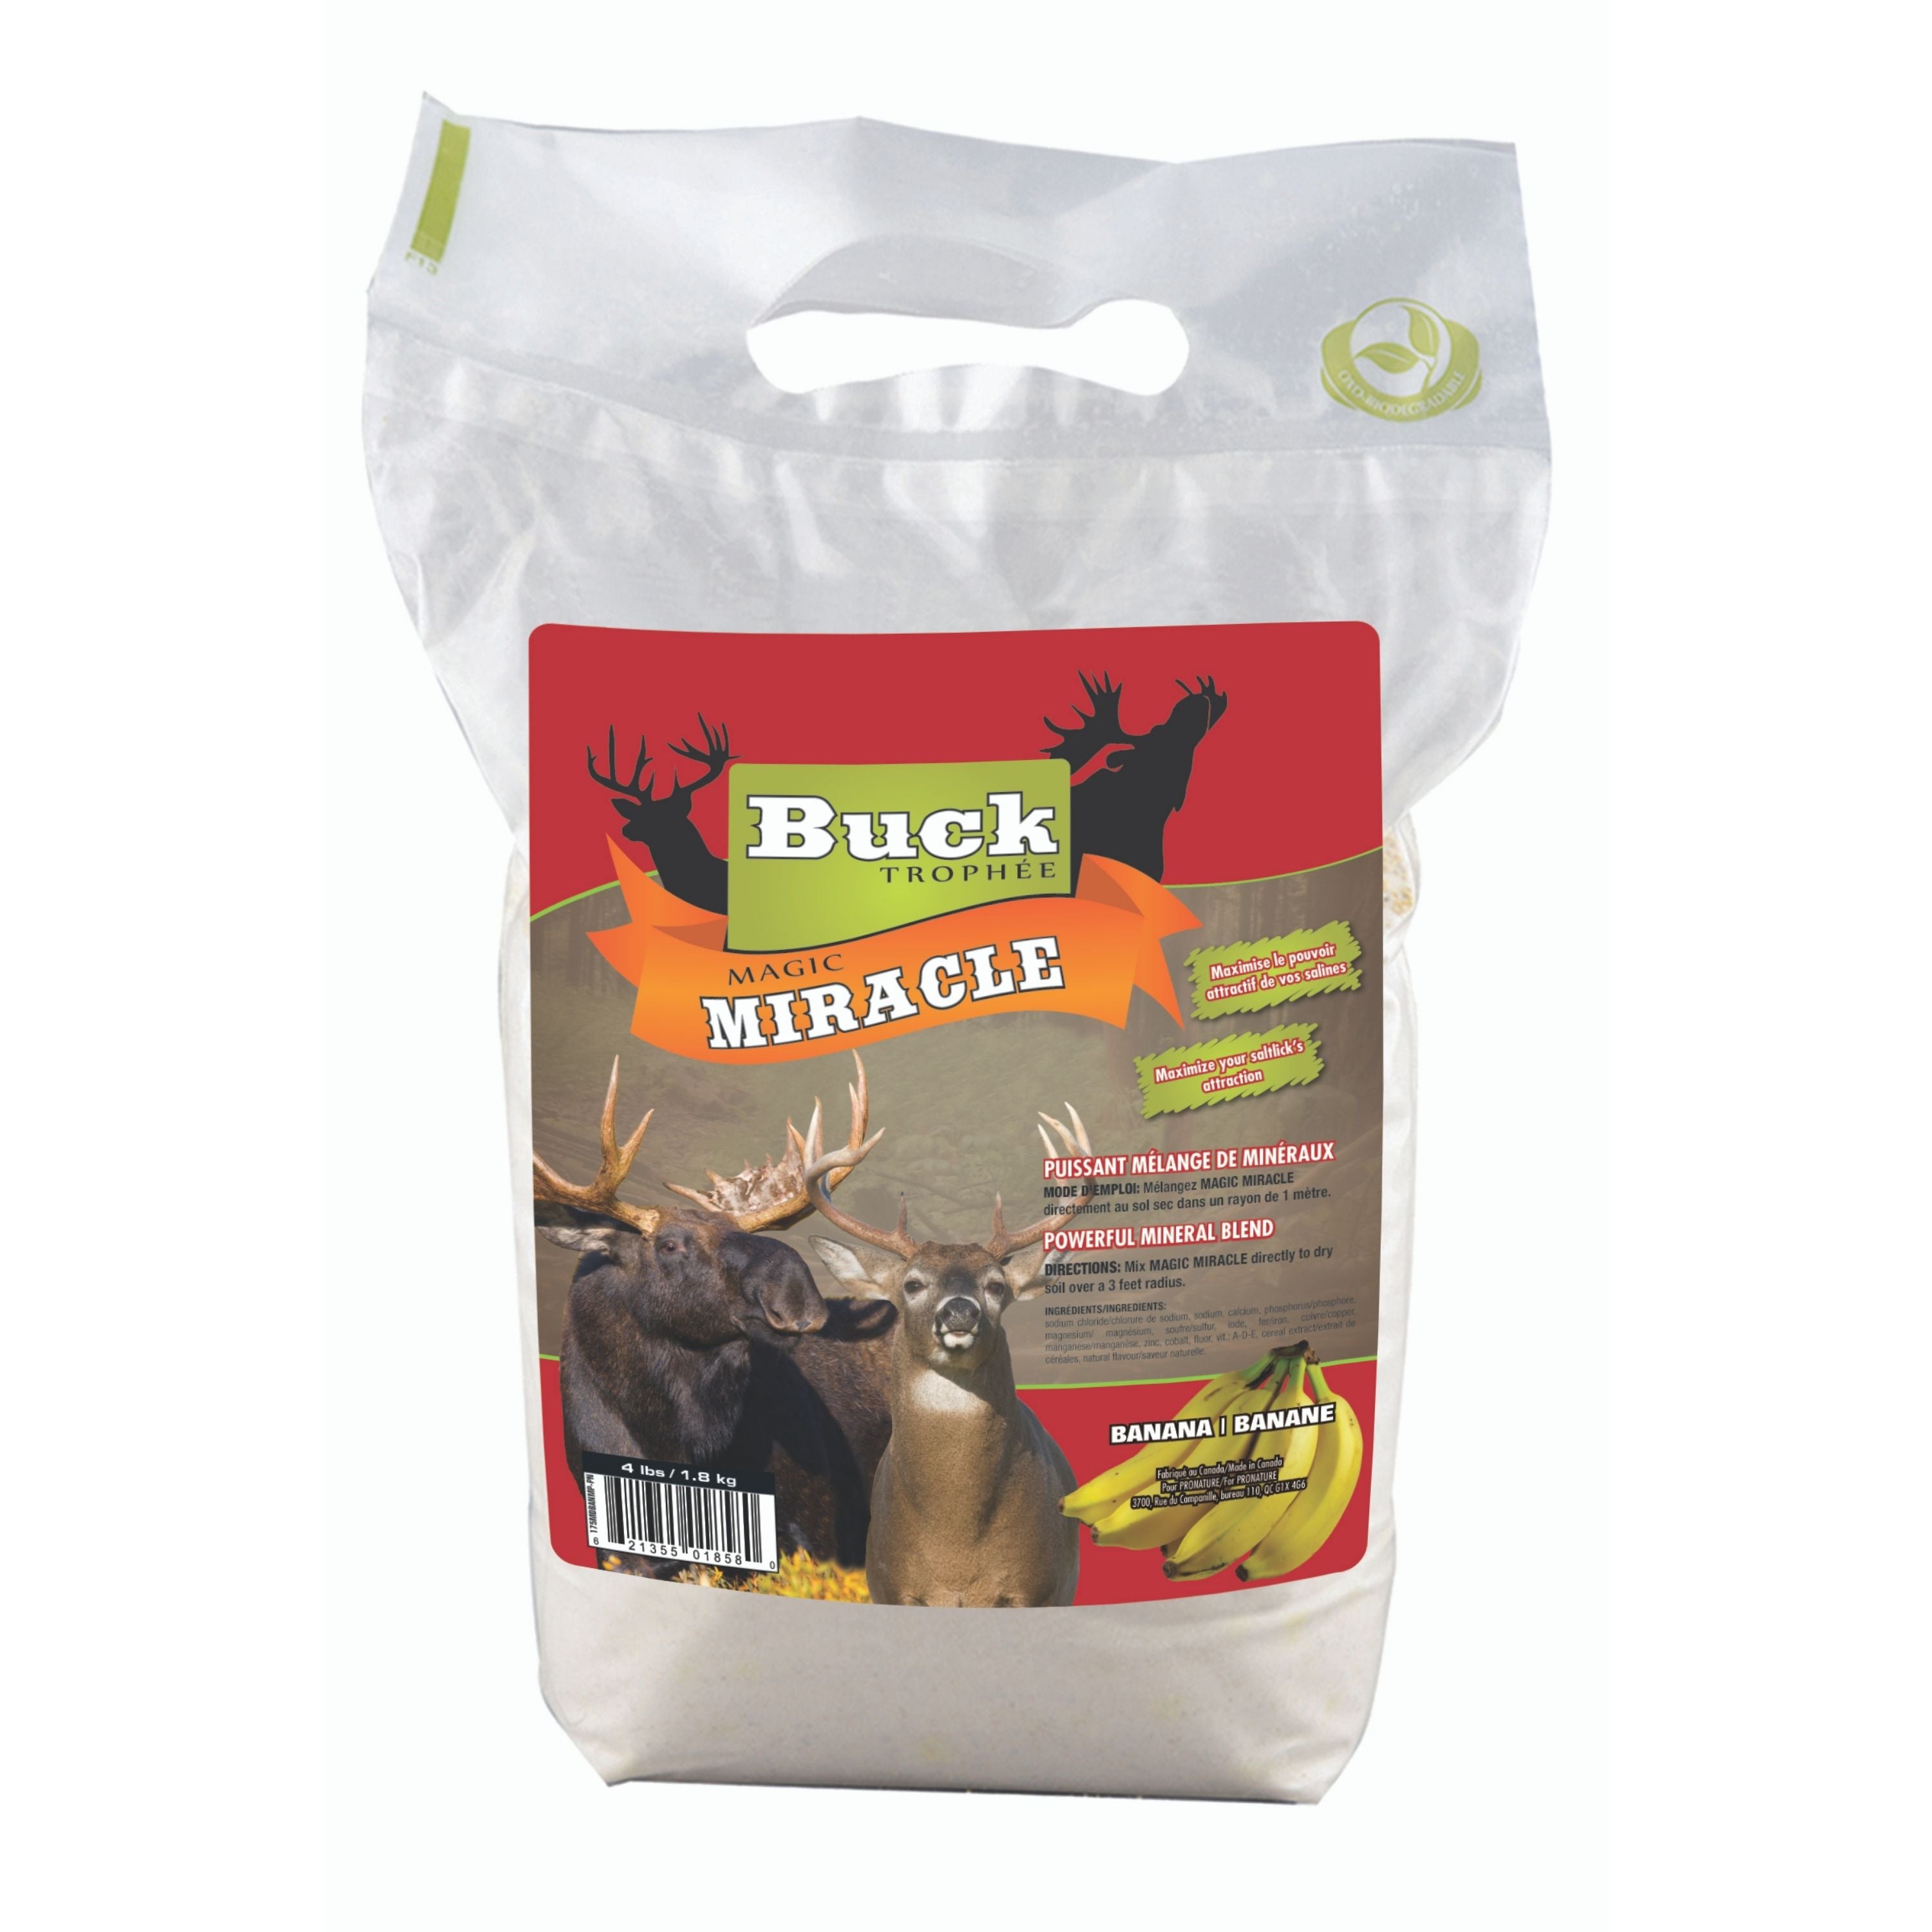 ”Magic miracle” Moose banana flavor volatile powder - 1.8kg